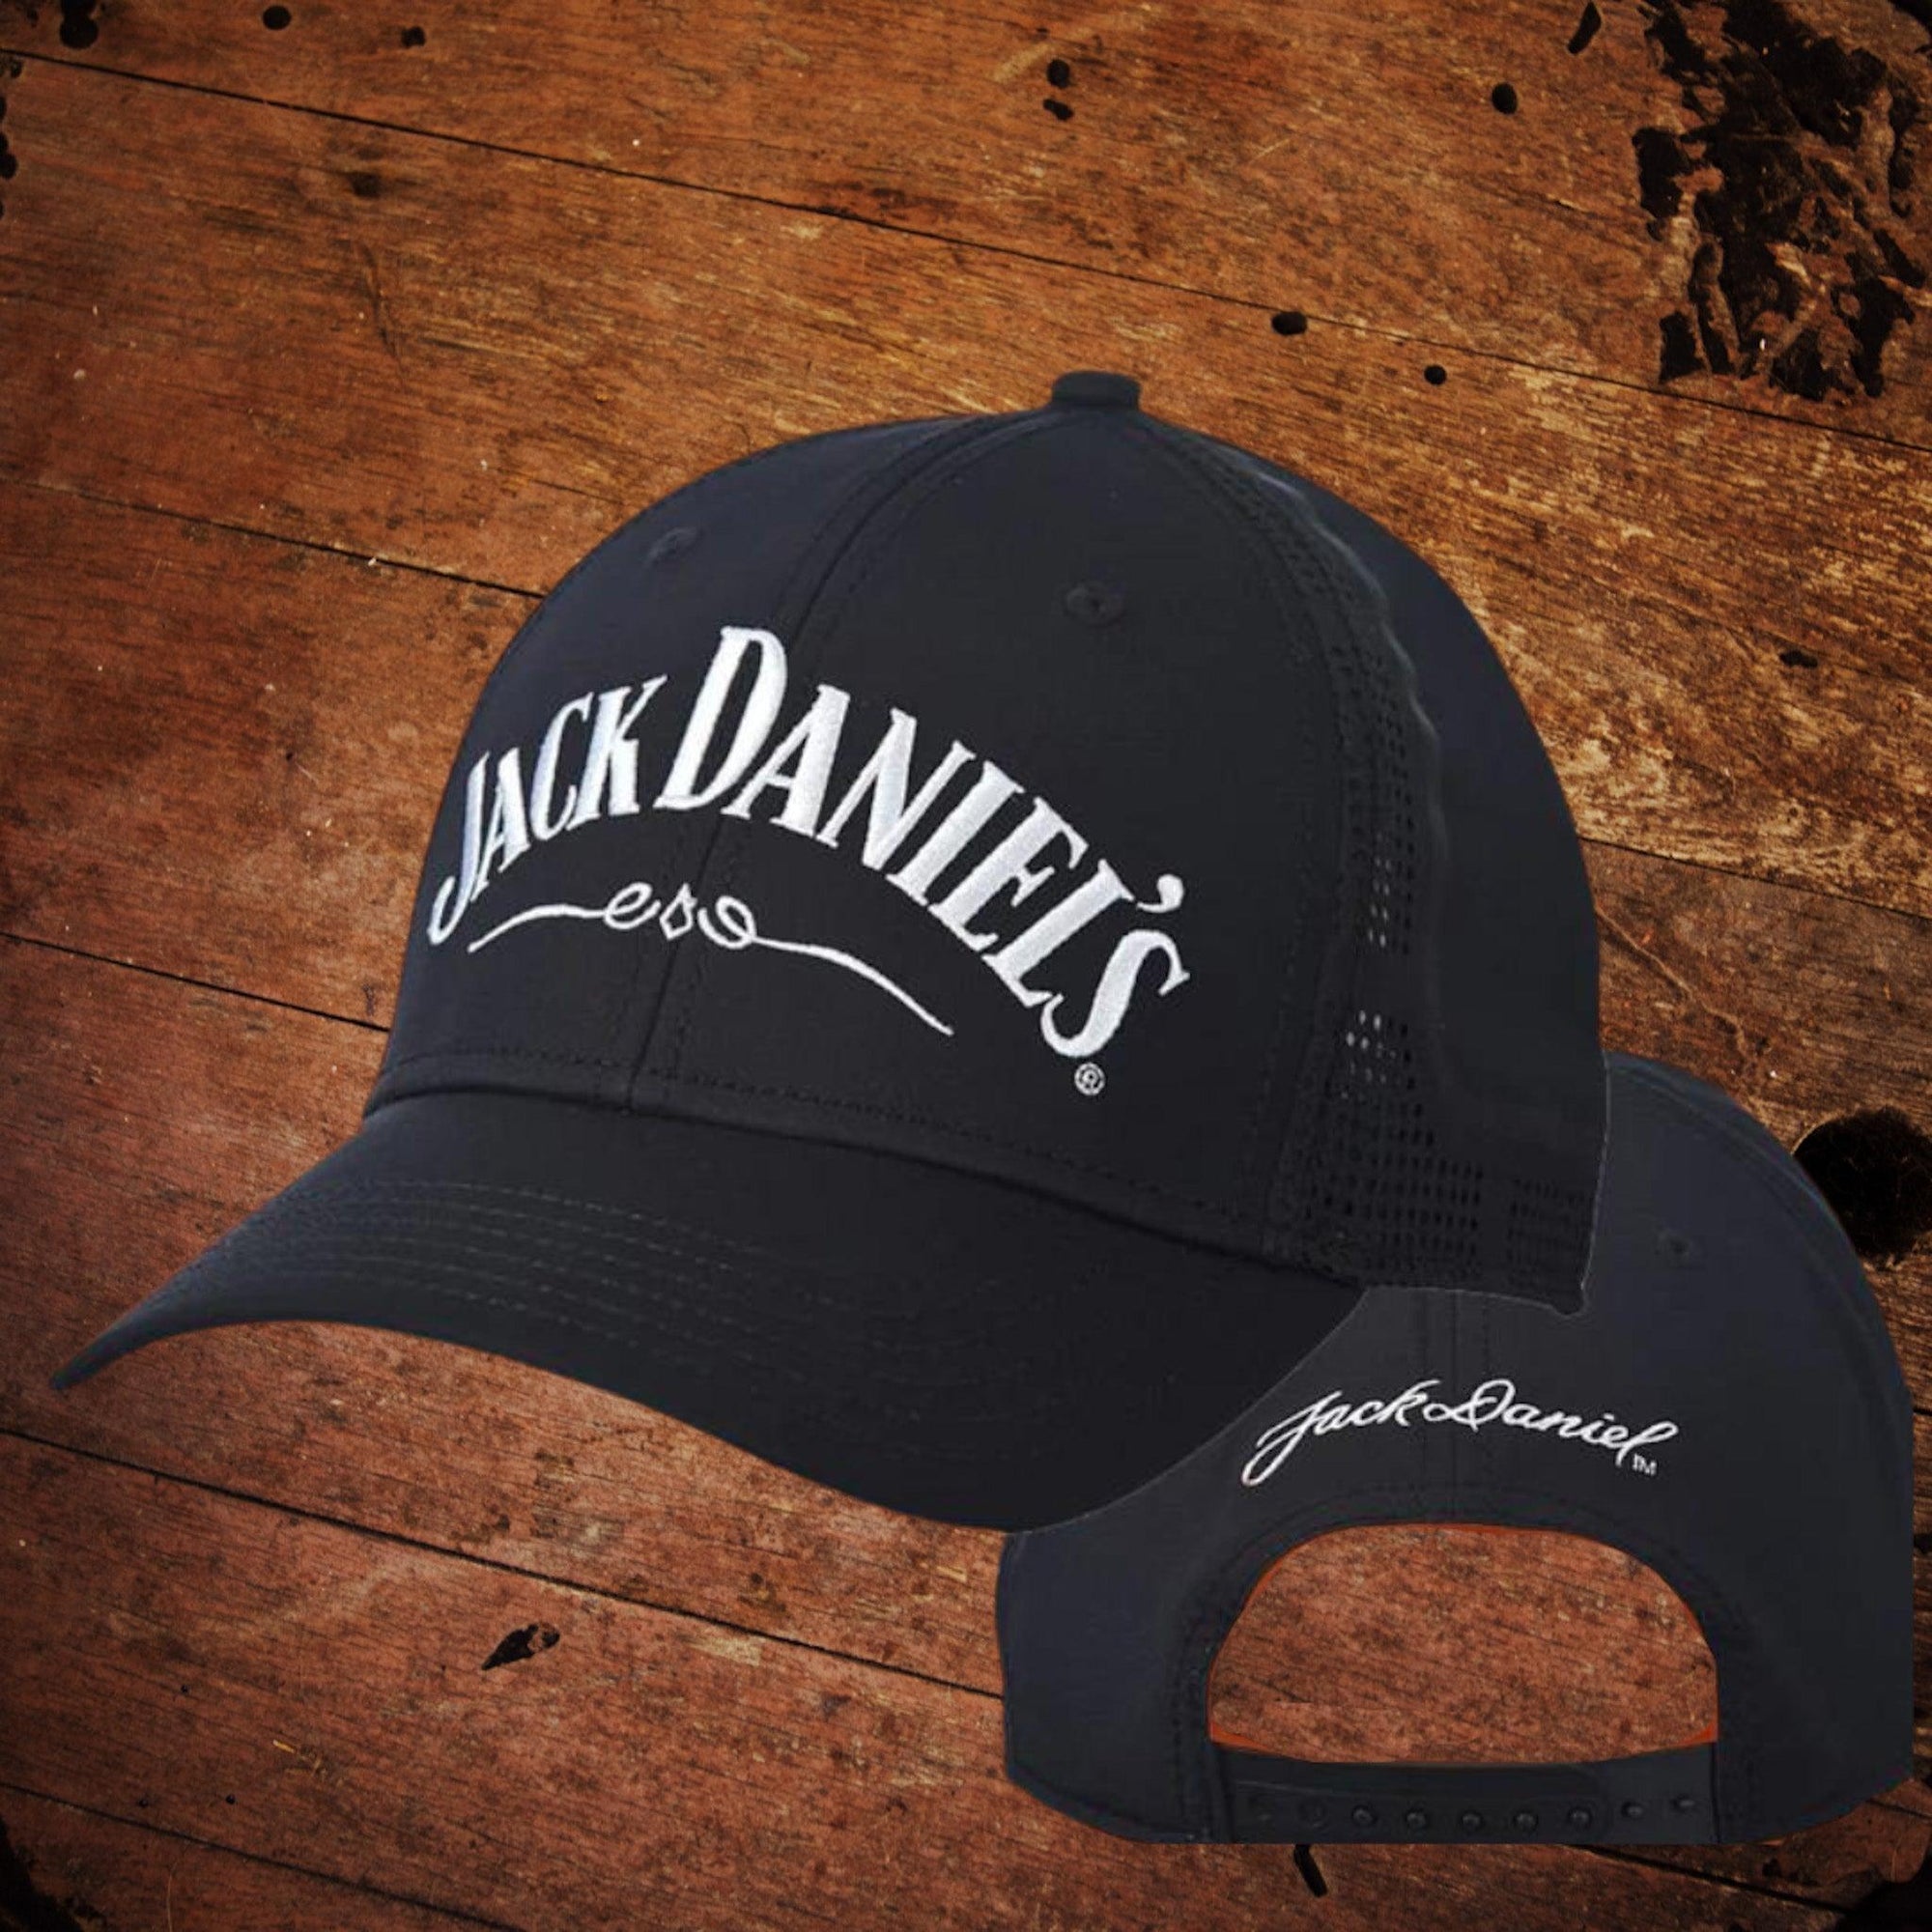 Jack Daniel’s Performance Baseball Hat - The Whiskey Cave